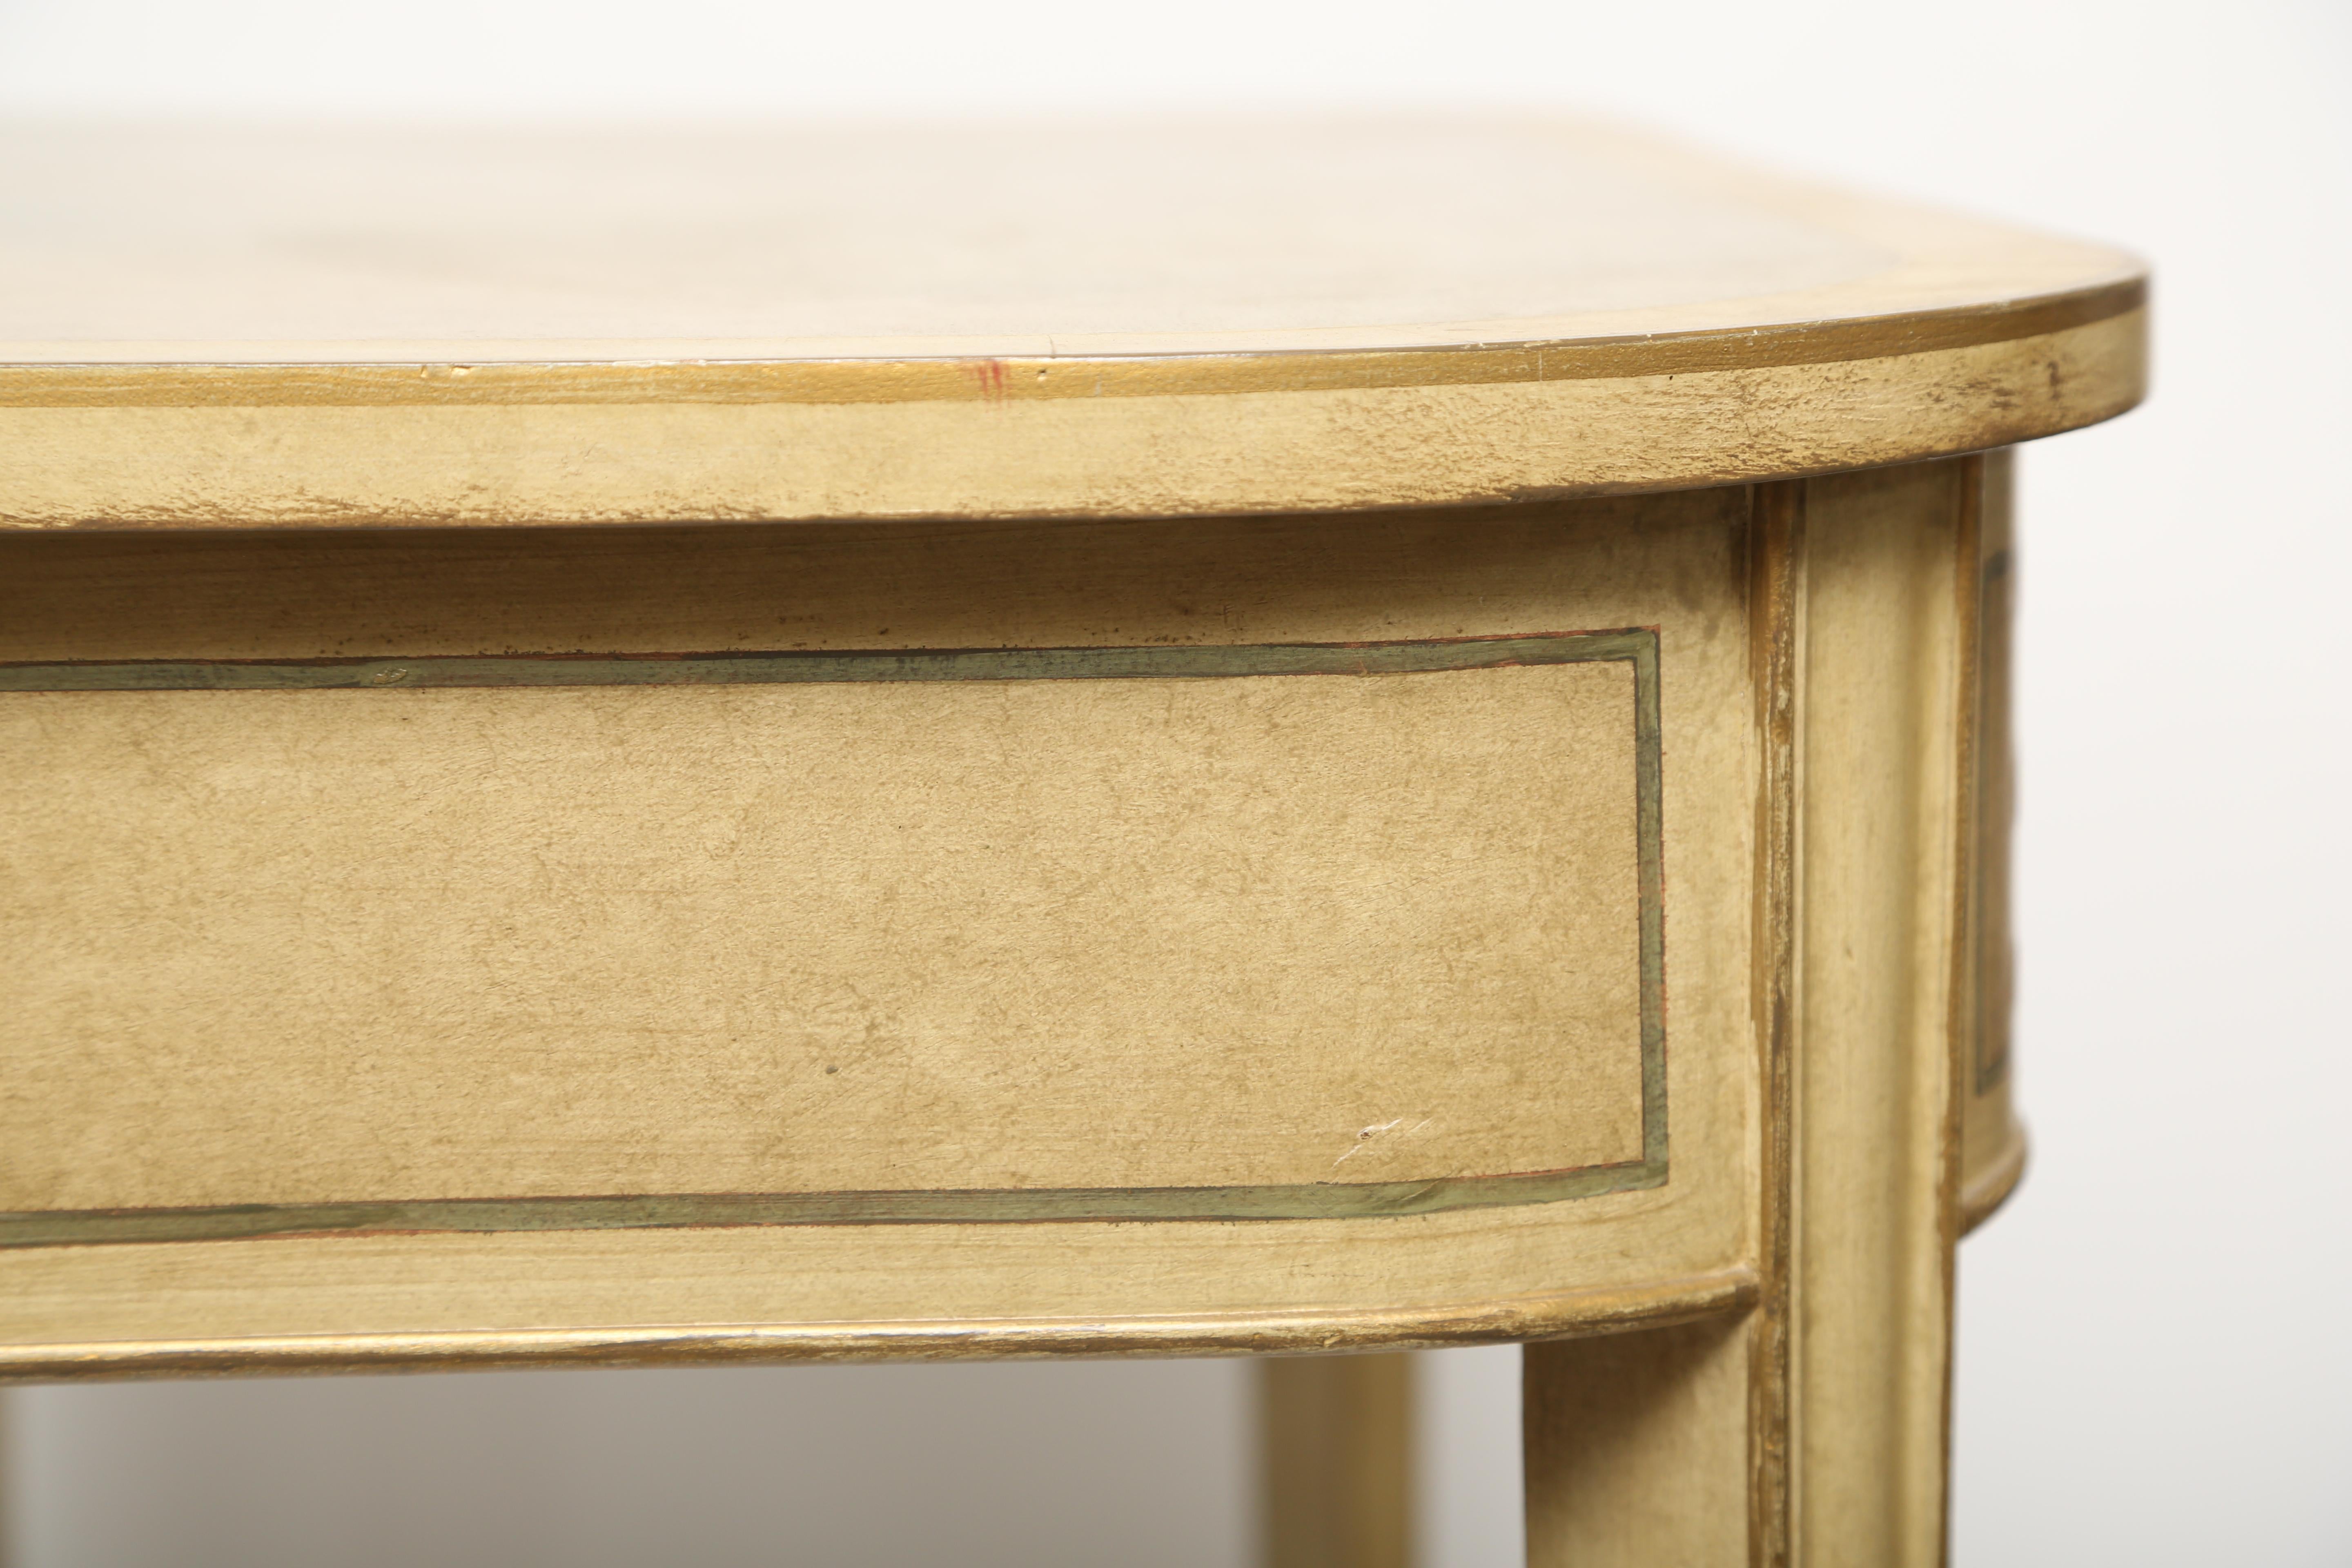  Console Tables Faux Painted to Resemble Parchment-A Pair 1